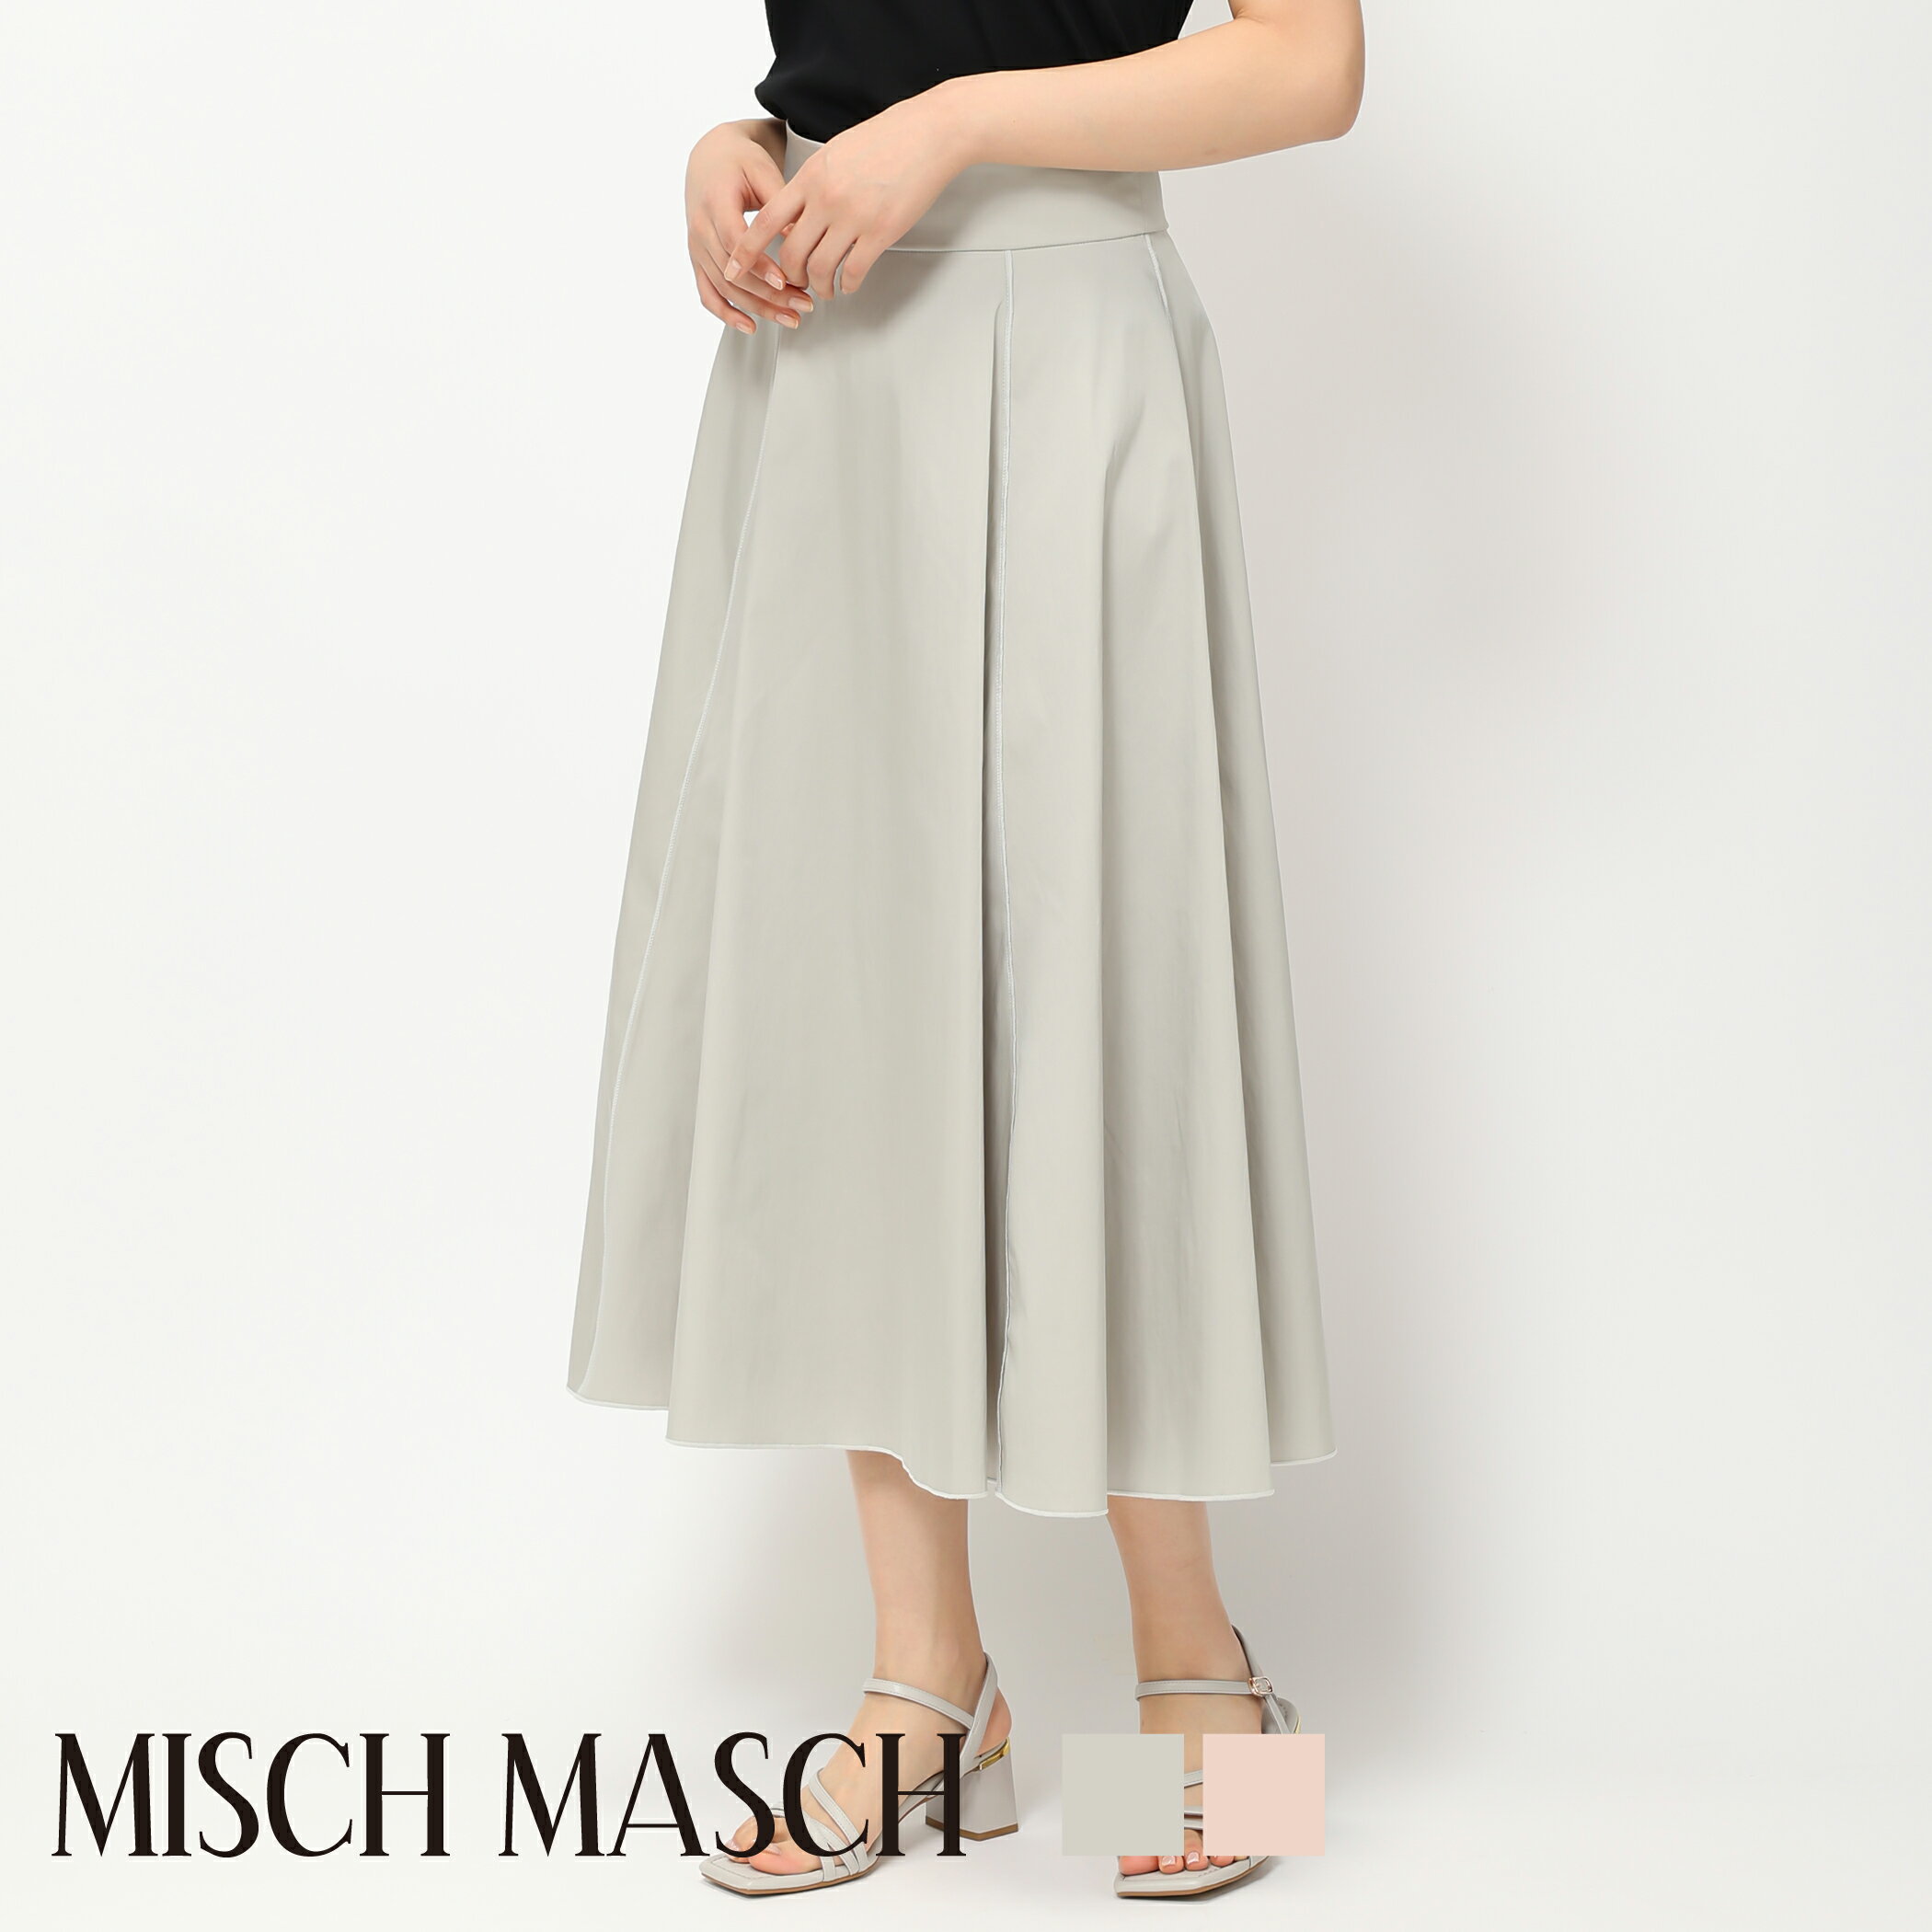 【MISCH MASCH】【ミッシュマッシュ】【公式】【フェミニン】リバーシブルフレアスカート/mm427210